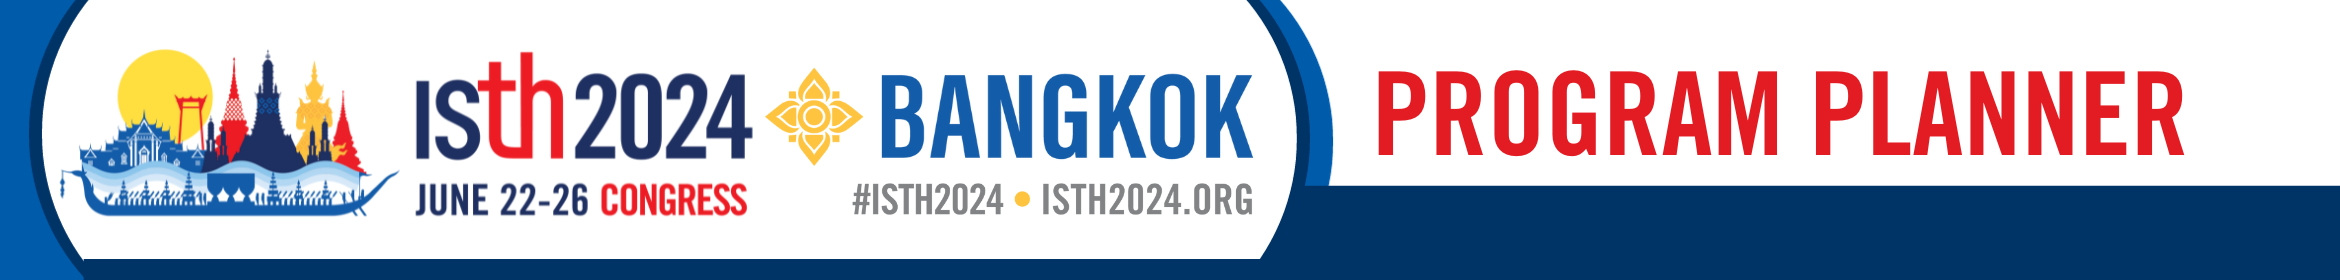 ISTH 2024 Main banner